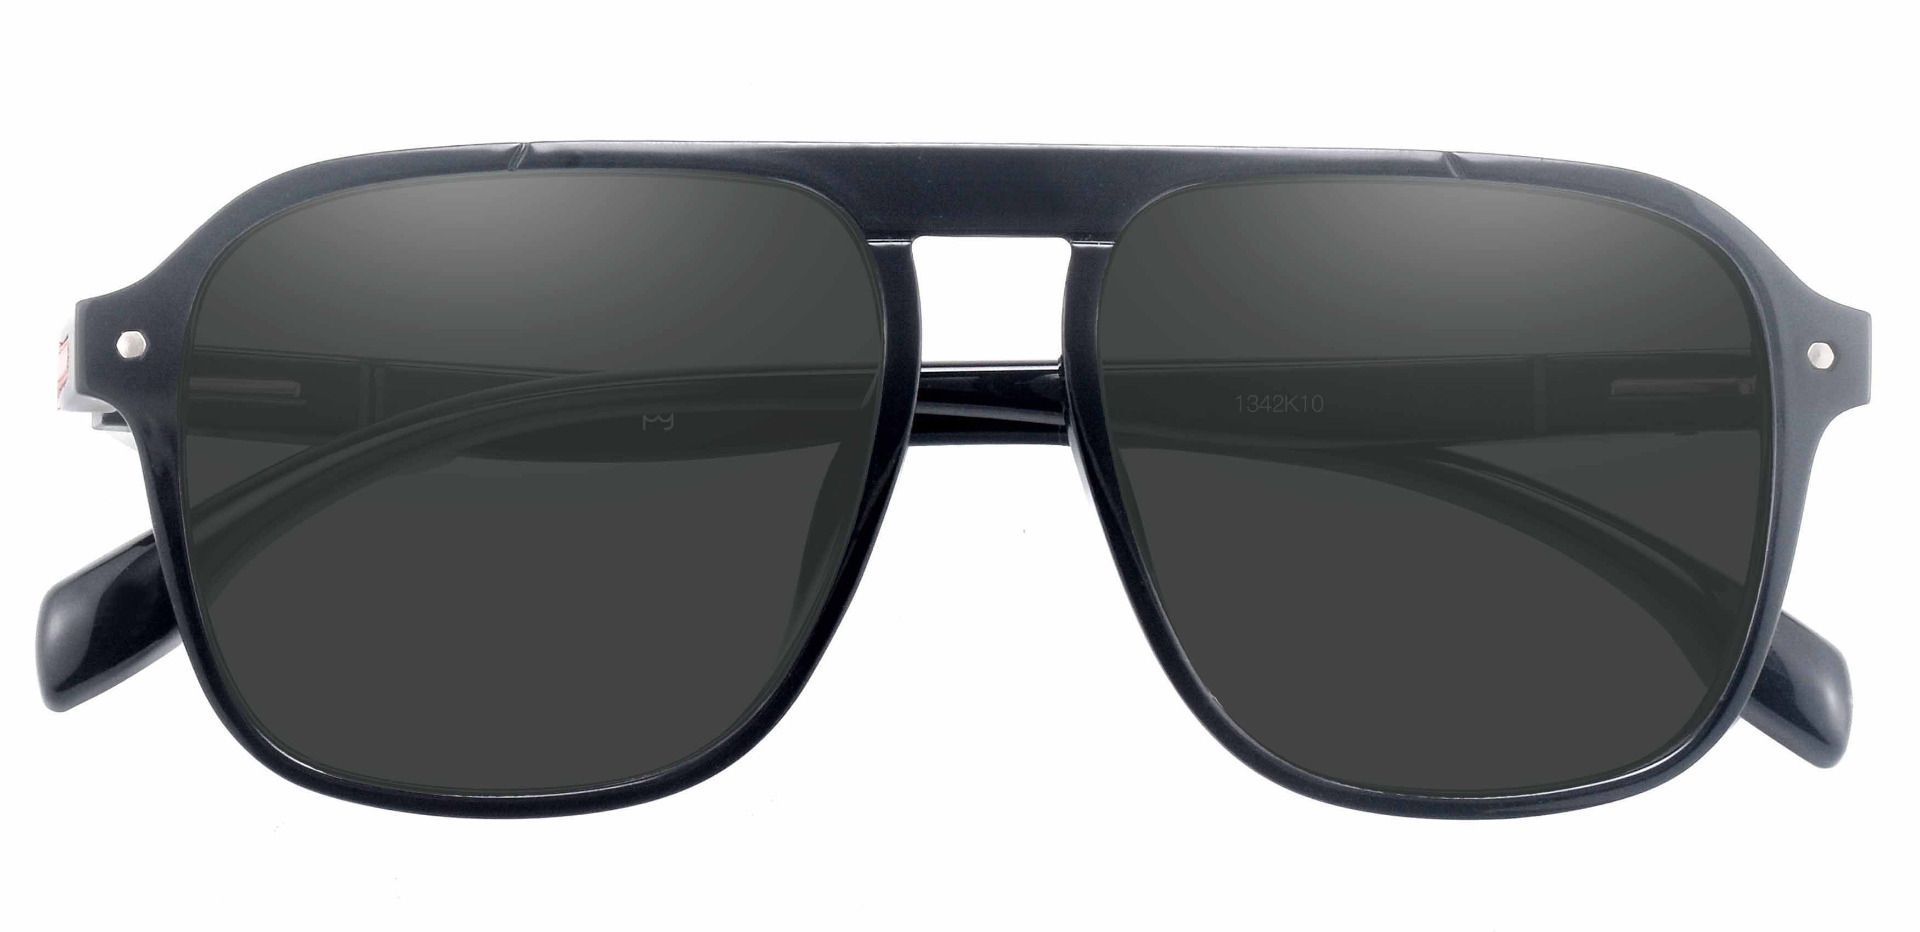 Gideon Aviator Lined Bifocal Sunglasses - Black Frame With Gray Lenses